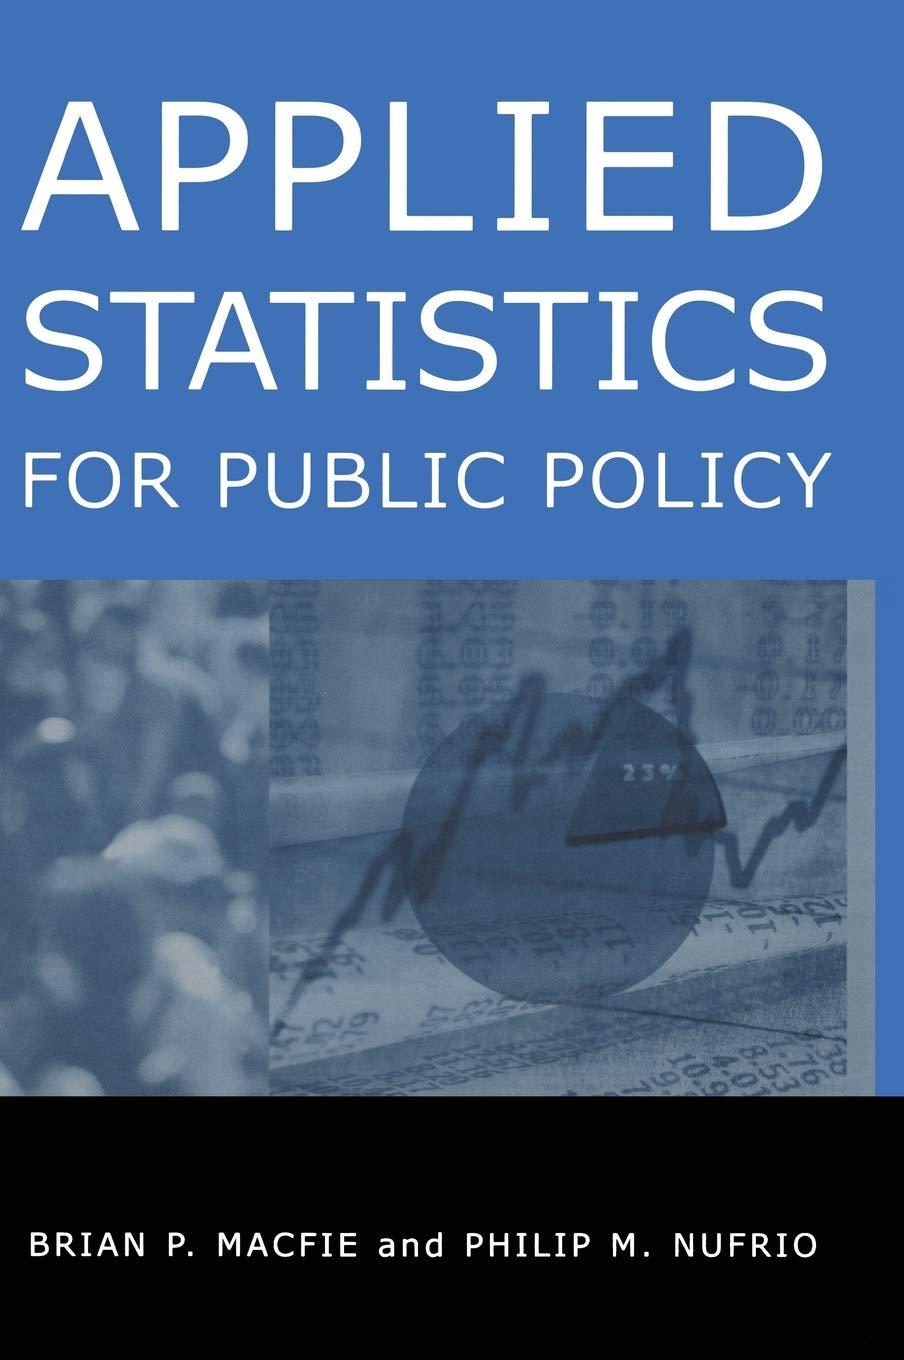 applied statistics for public policy 1st edition brian p. macfie, philip m. nufrio 0765612399, 9780765612397